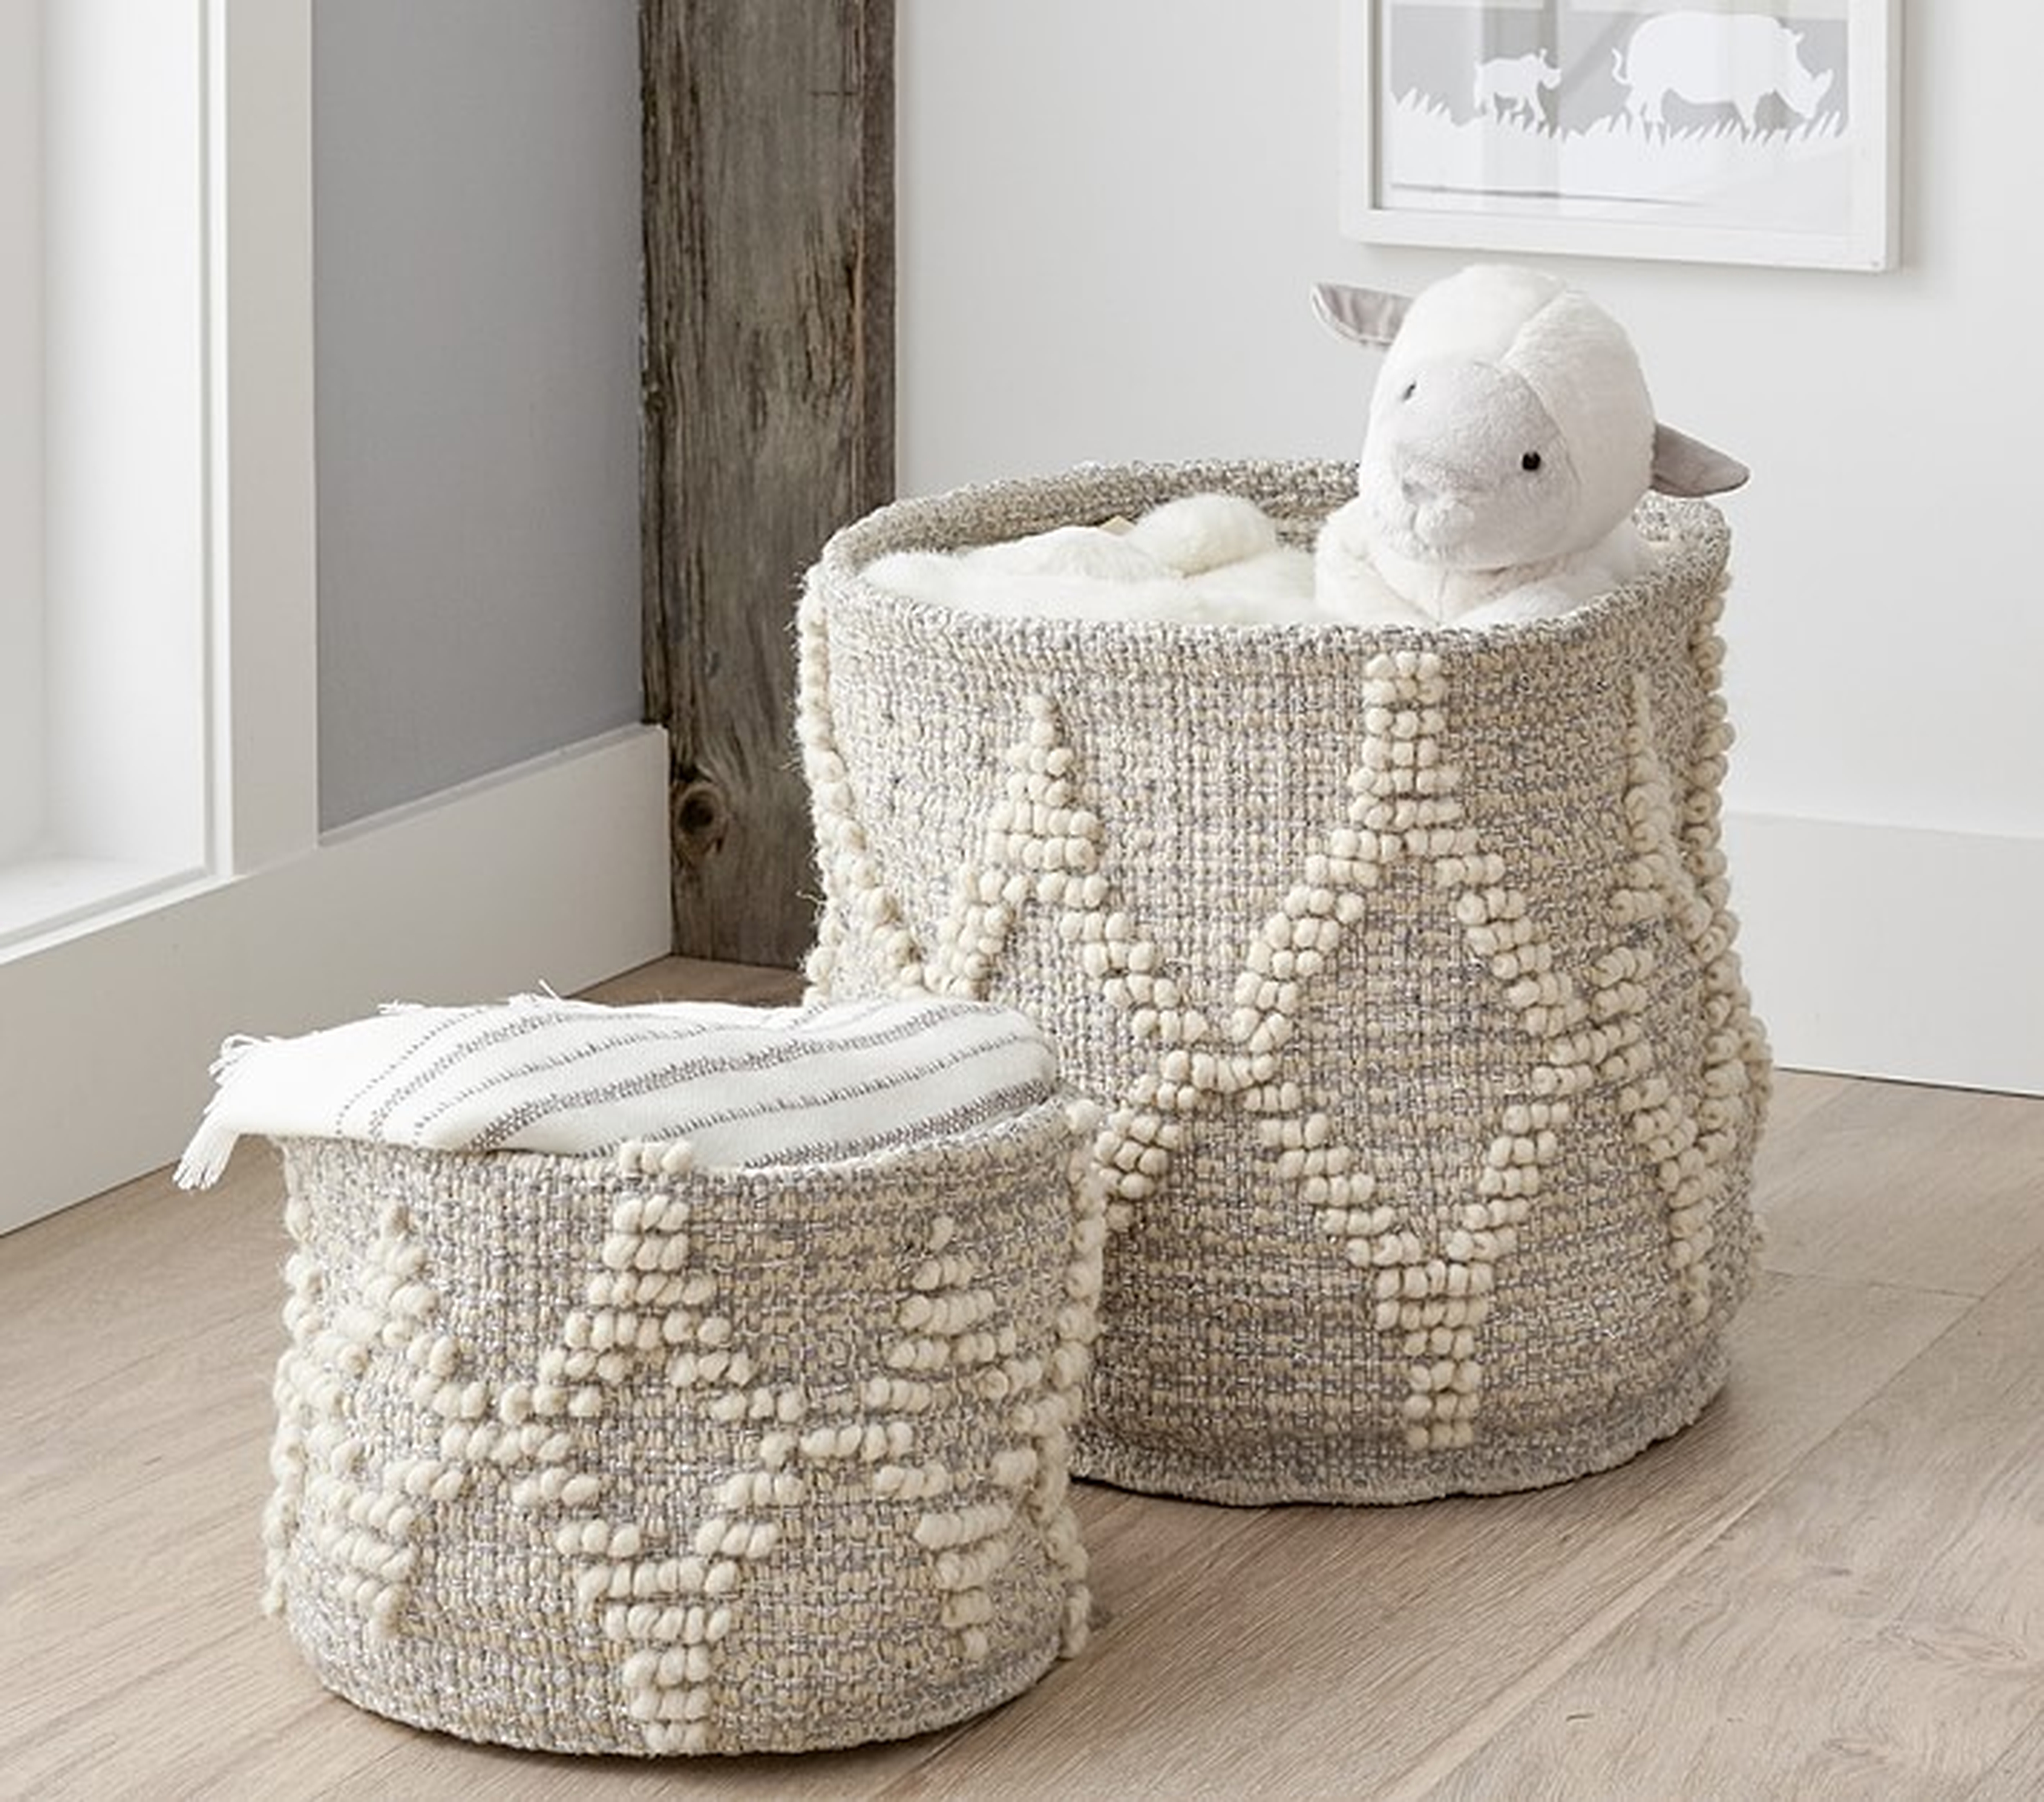 Winter Bohemian Wool Basket -White w/ Silver Metallic Toy Dump - Large - Pottery Barn Kids